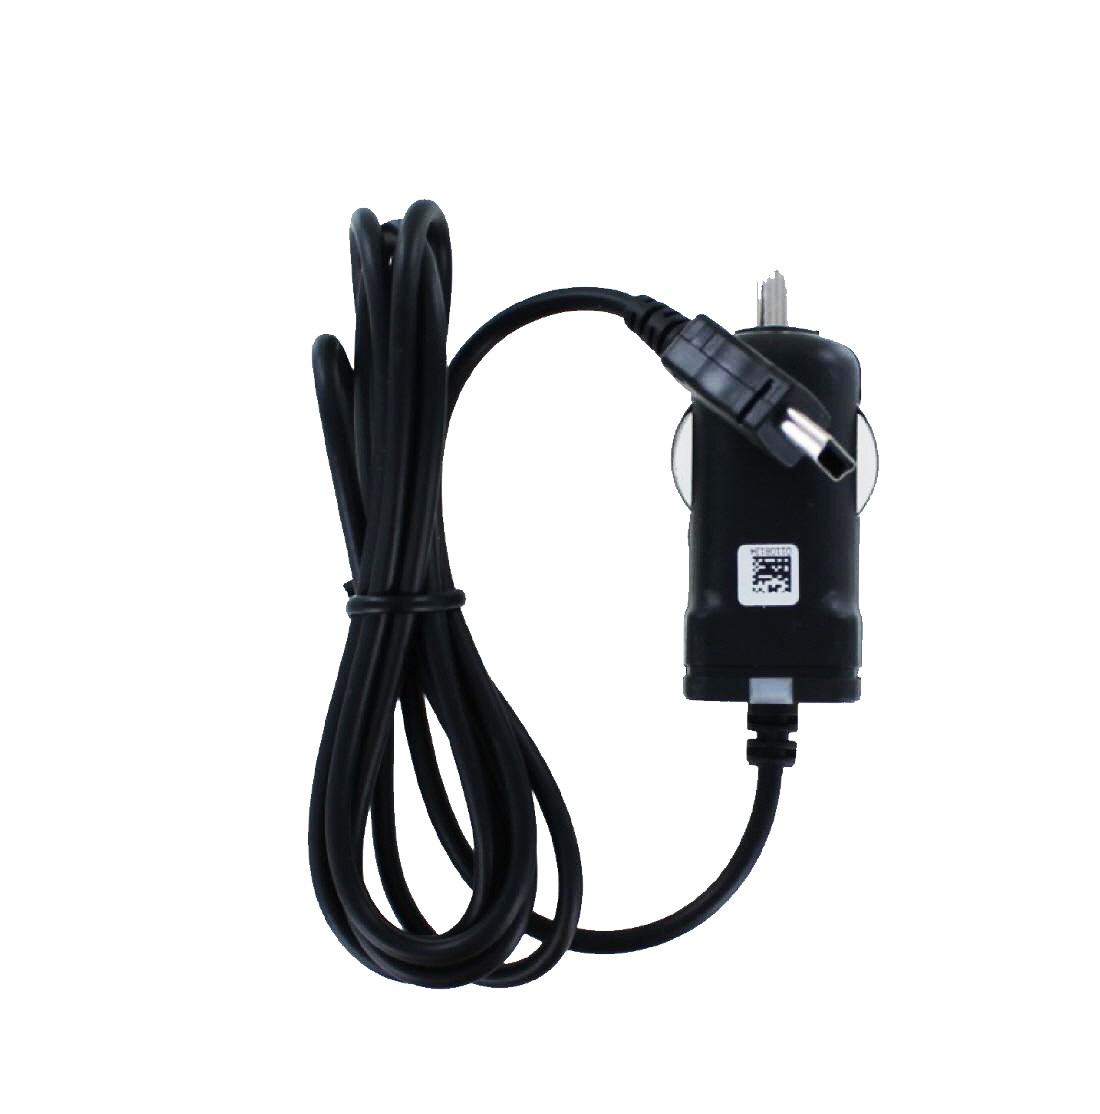 MOBILOTEC Ladekabel kompatibel Volt, C330 Netzteil/Ladegerät 5 schwarz mit Garmin StreetPilot Garmin